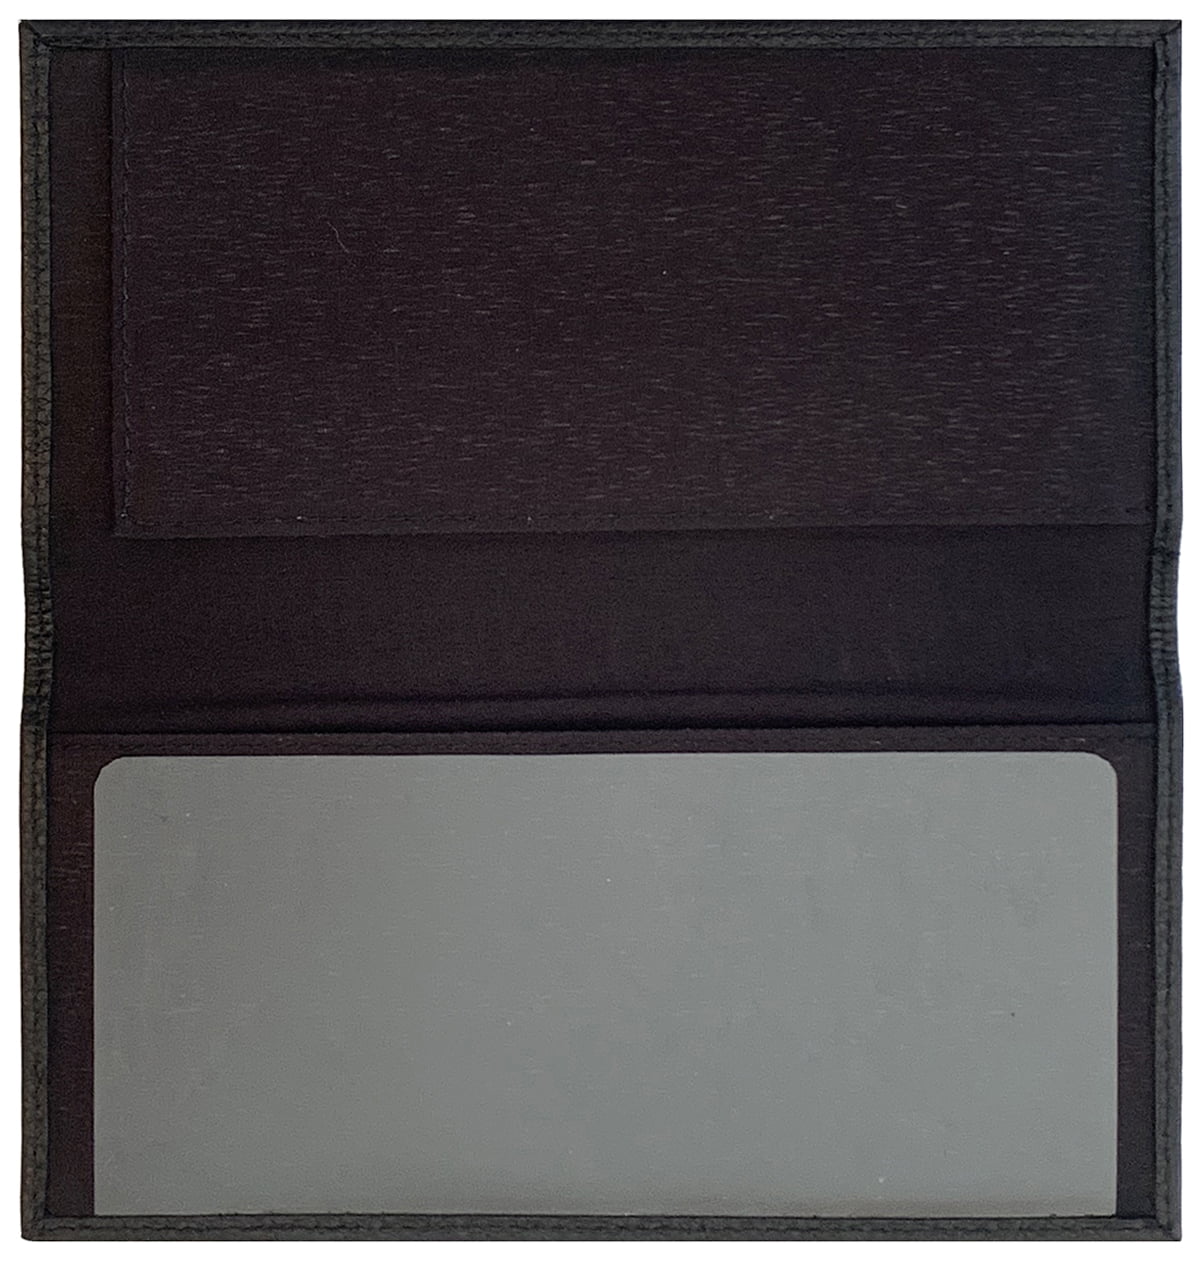 Basic Black Leather Checkbook Cover 